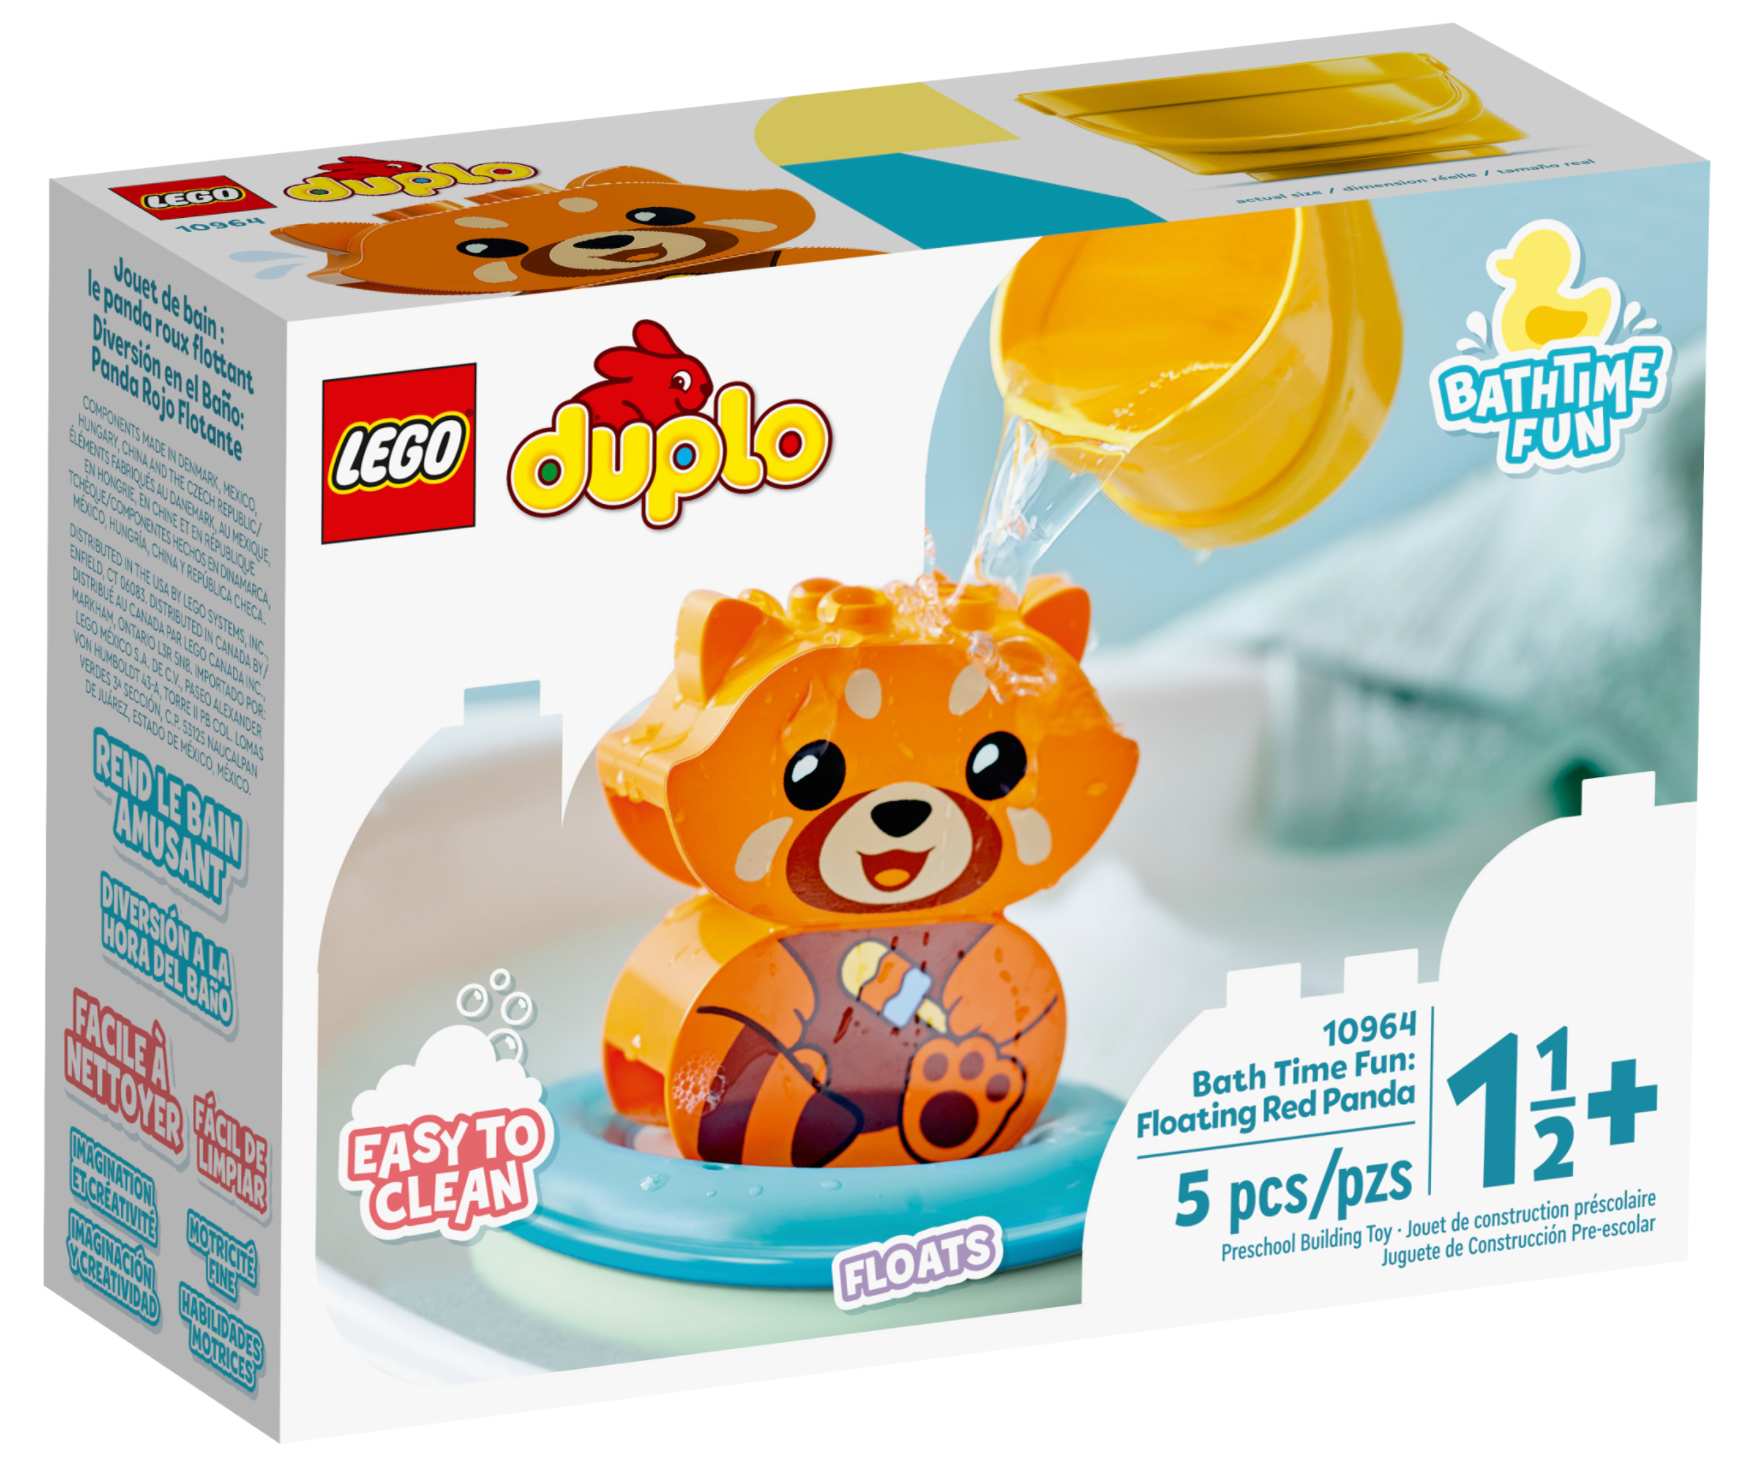 LEGO: DUPLO Bath Time Fun - Floating Red Panda